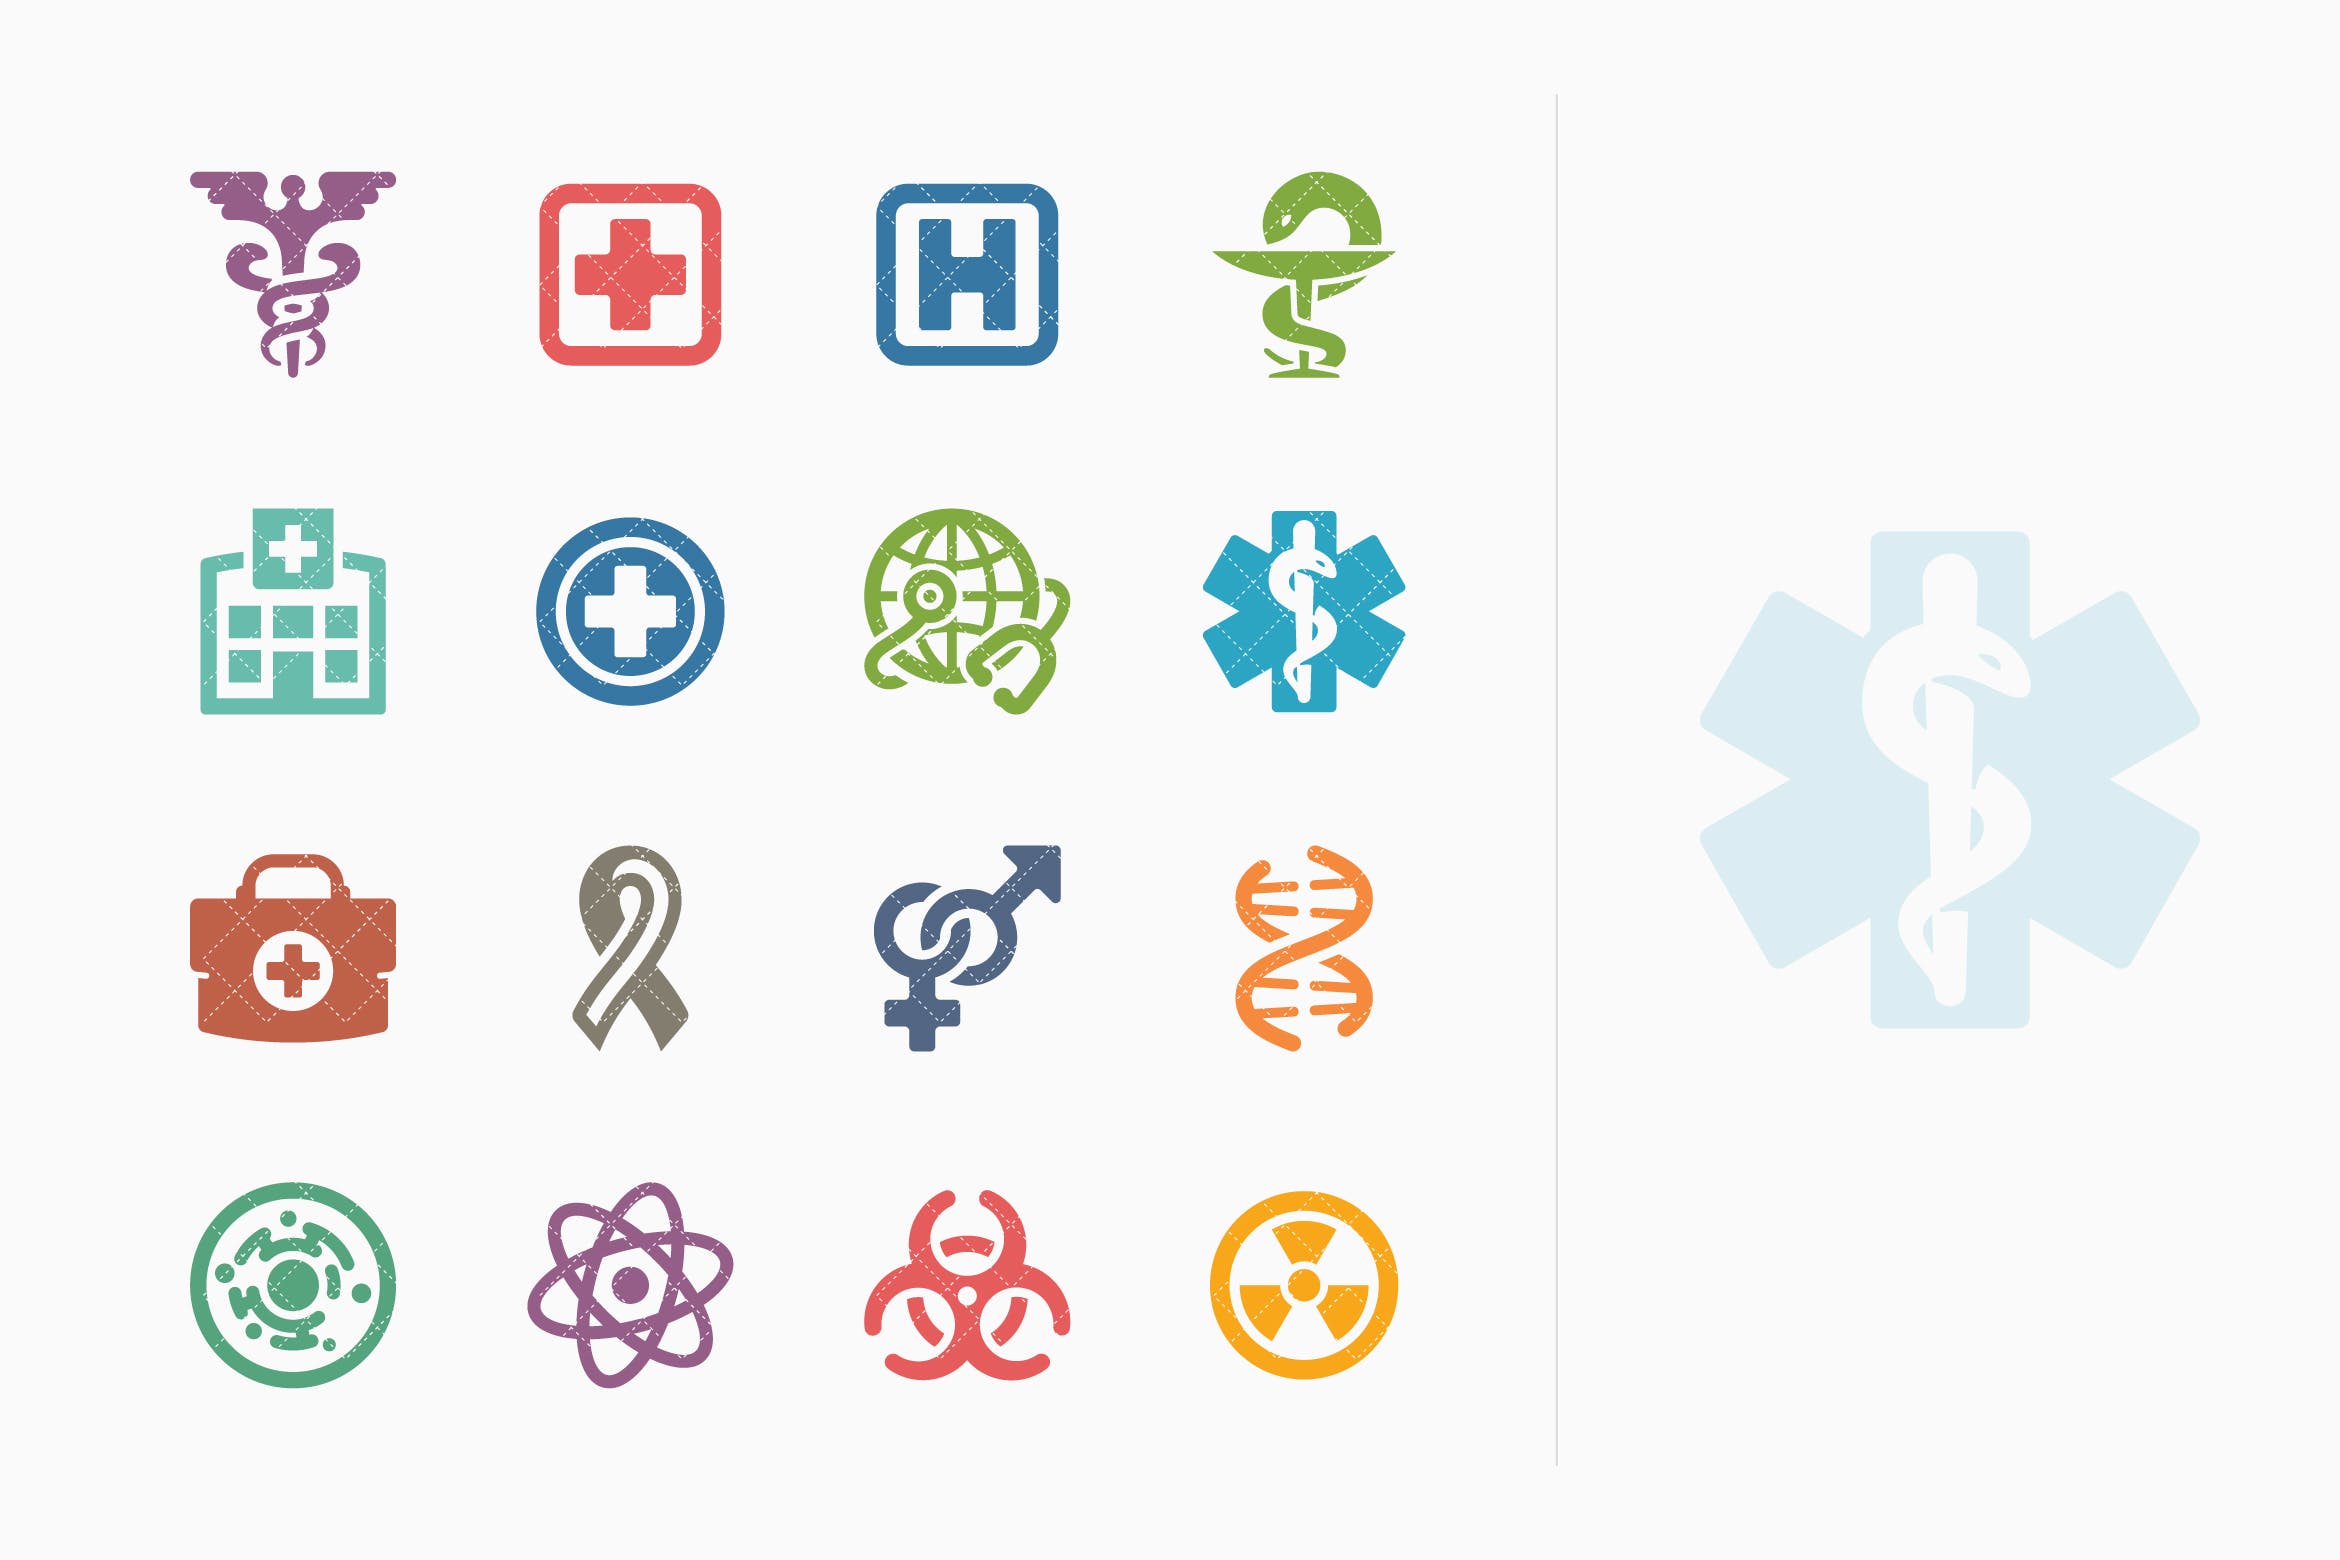 Colored系列-医疗保健主题矢量16设计素材网精选图标集v1 Medical & Health Care Icons Set 1 – Colored Series插图